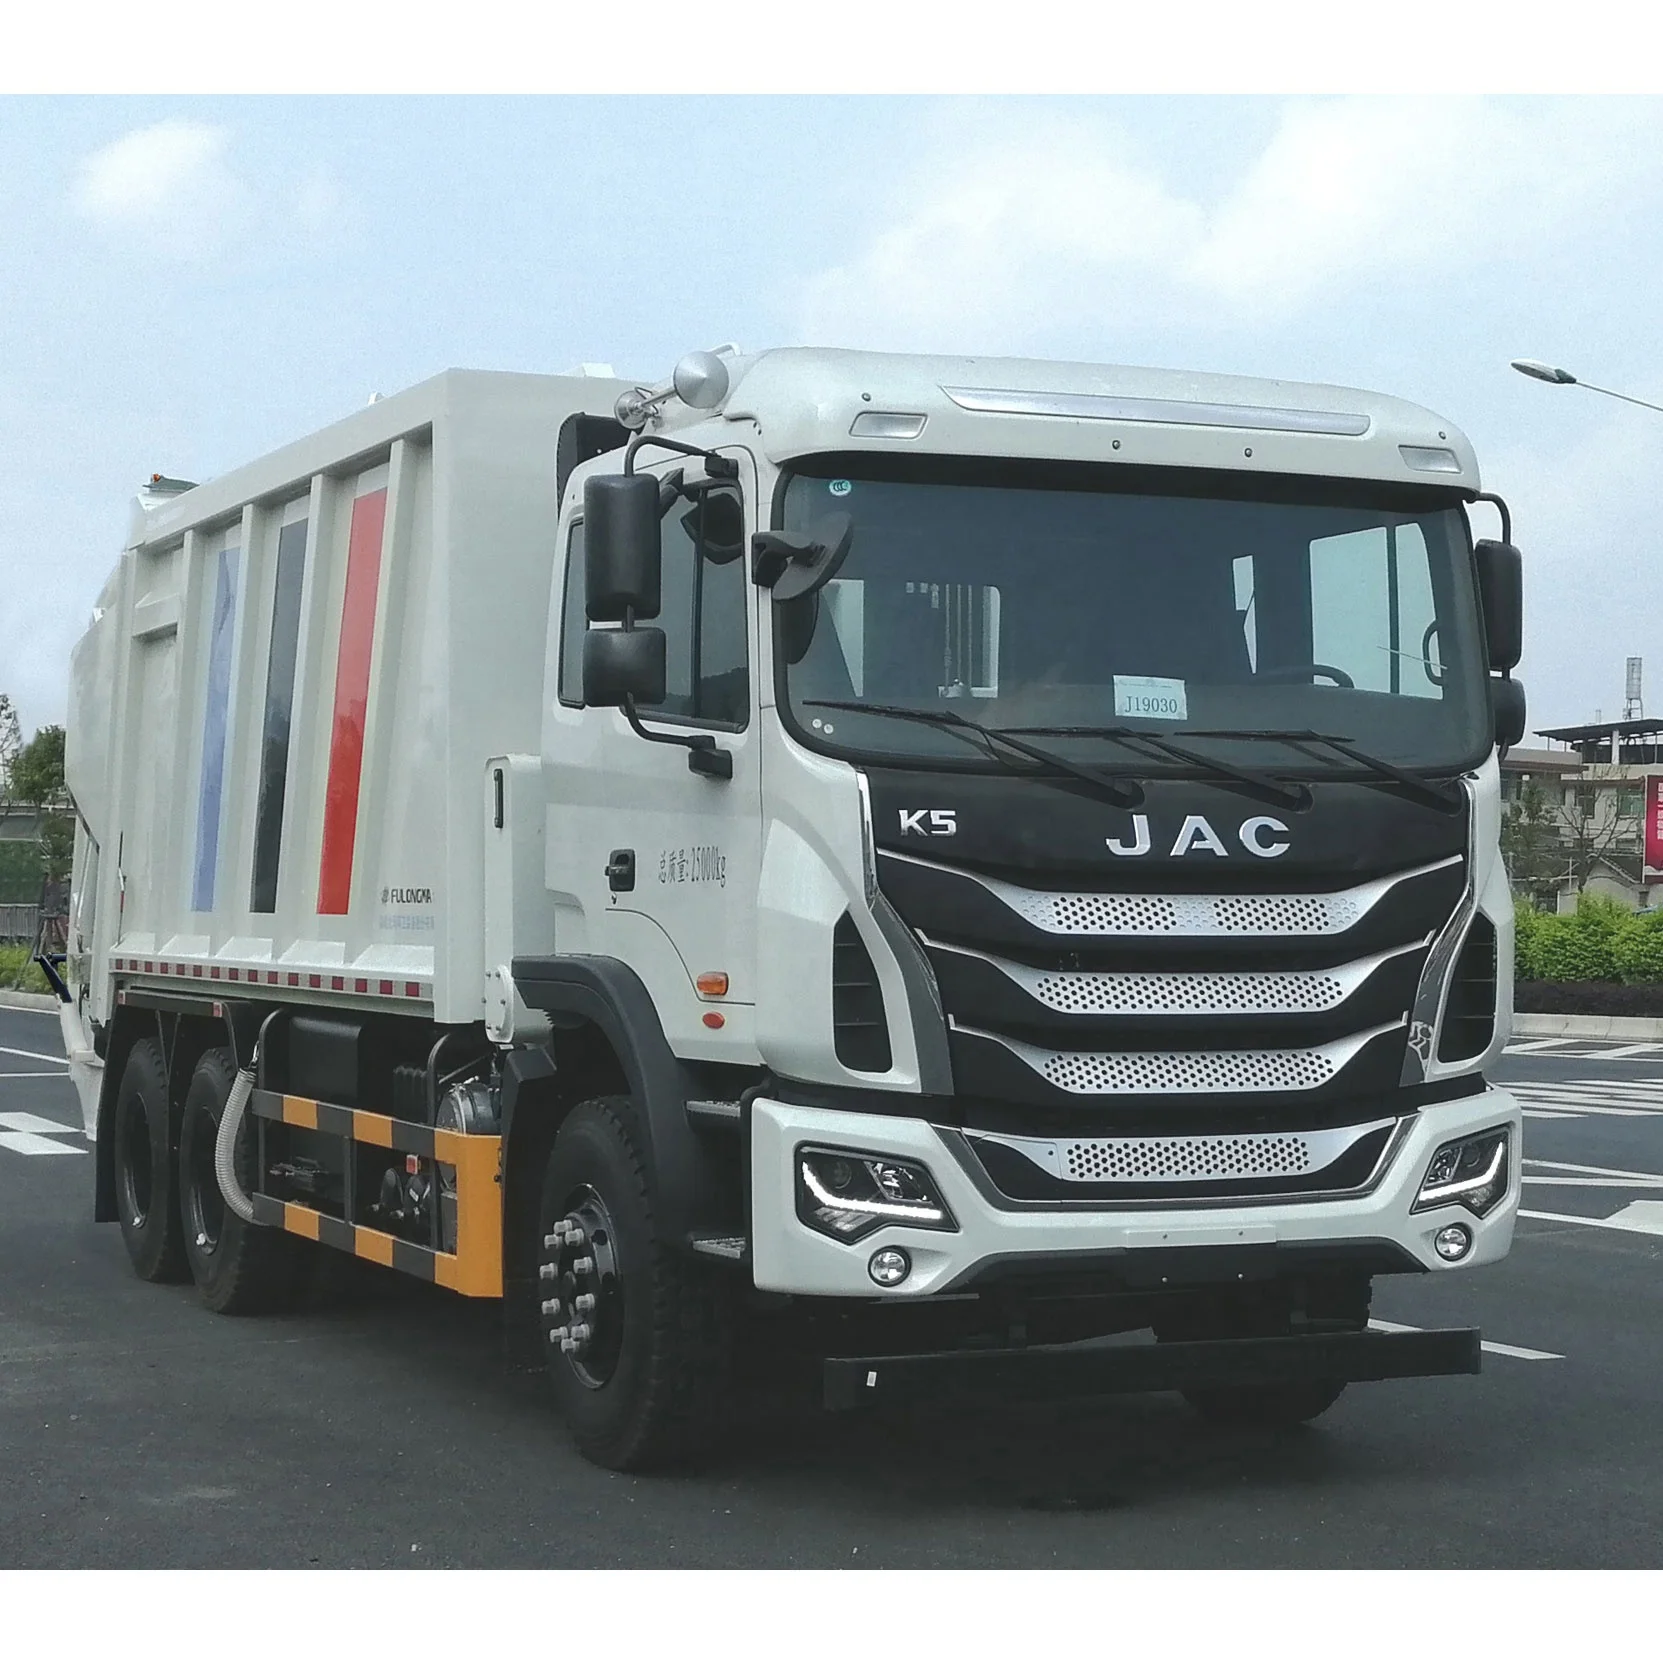 
25 ton heavy duty roll off refuse trucks rear loader garbage vehicle  (1600122084540)